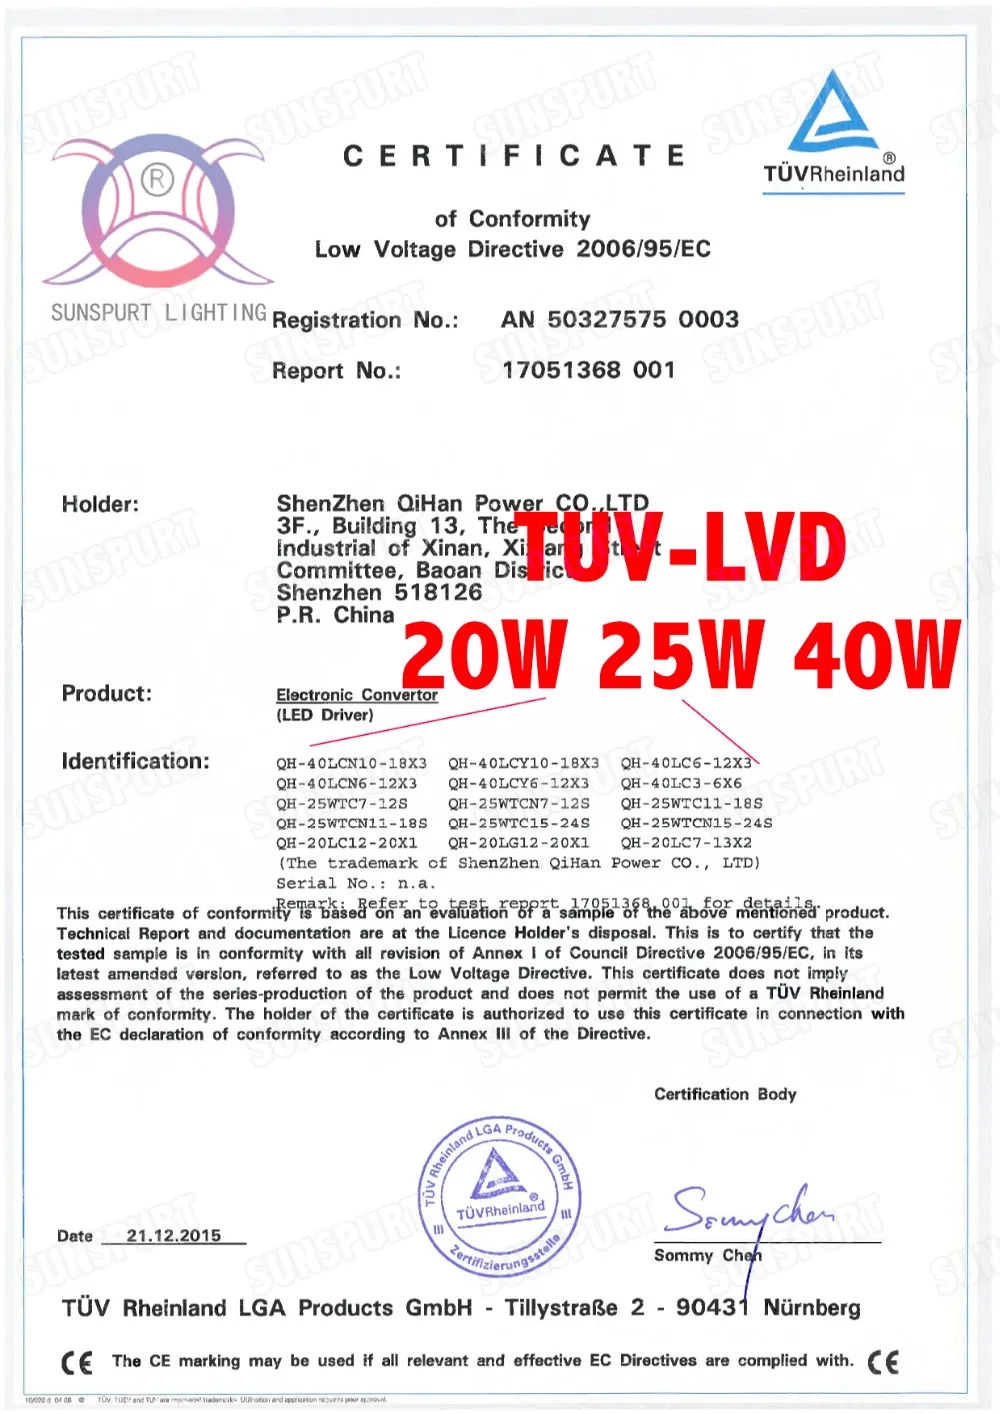 lc20w 25w 40w TUV-LVD Cert